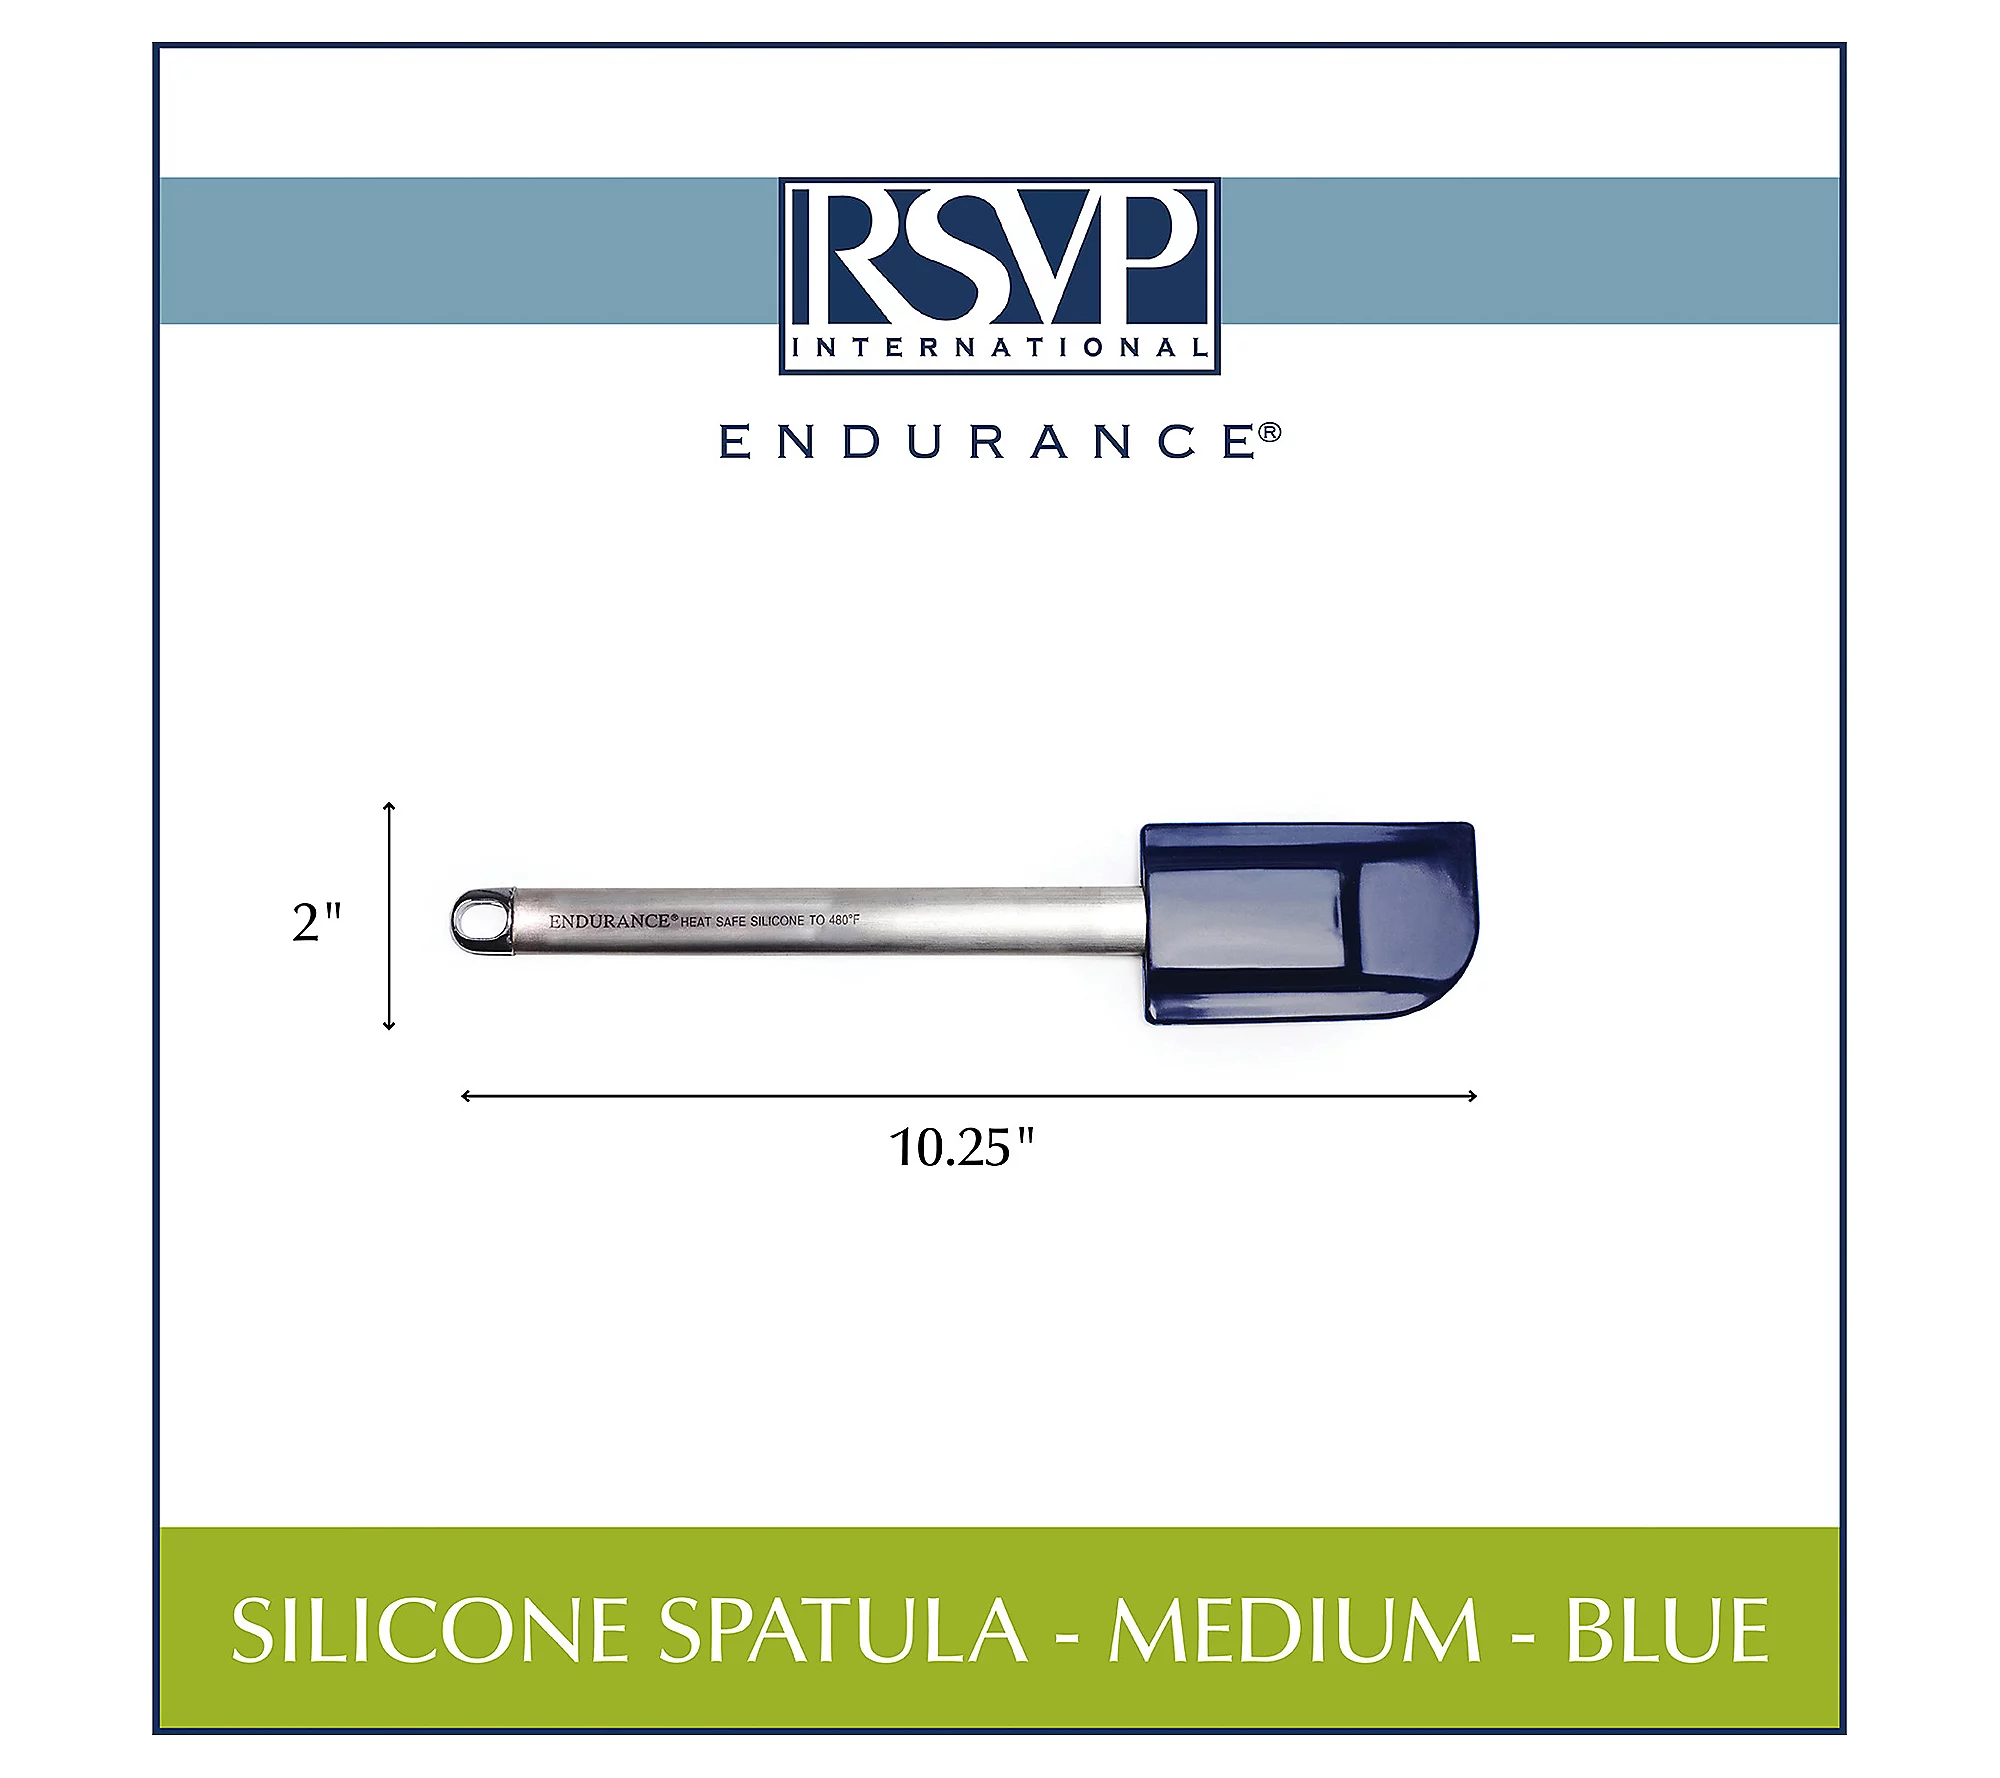 RSVP Silicone Spatula Medium